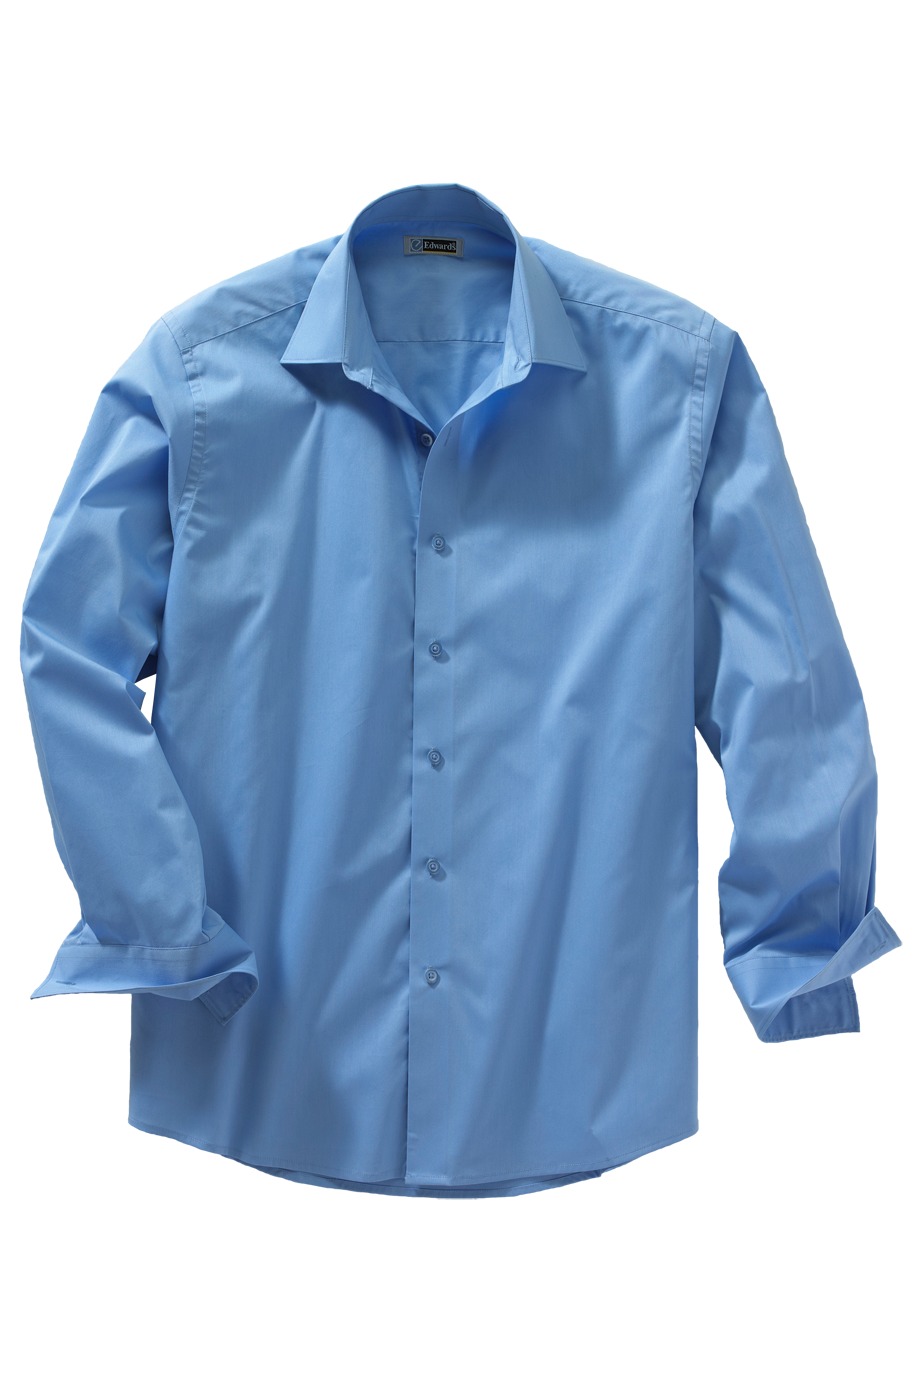 Edwards Garment 1033 - Spread Collar Dress Shirt